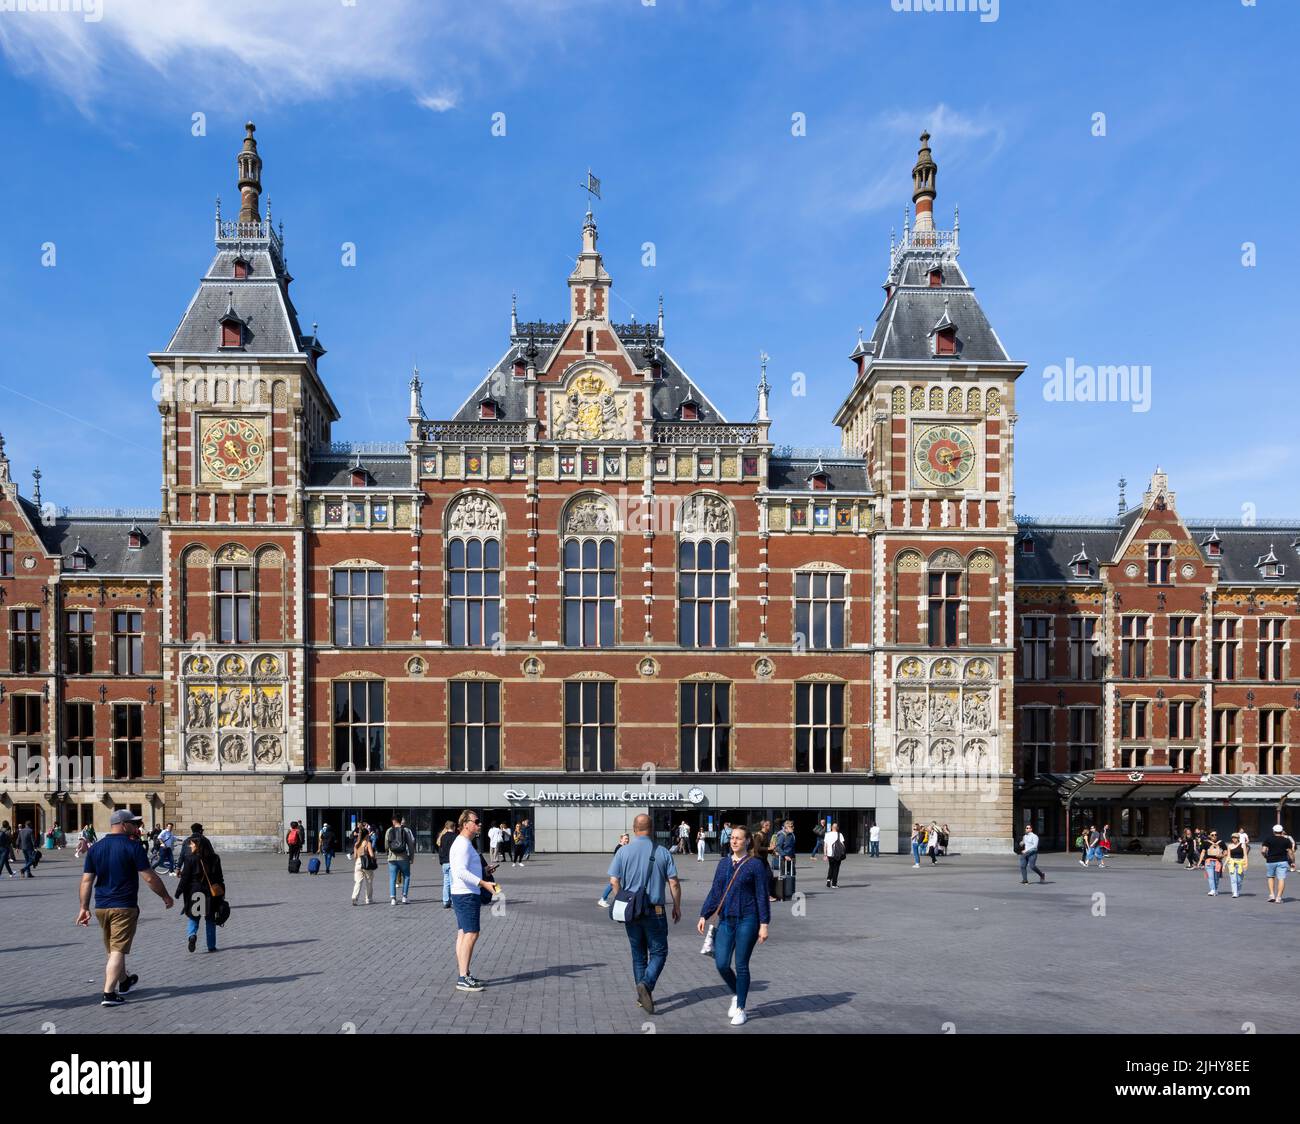 Renaissance Revival architecture, Amsterdam Centraal Station, pays-Bas Banque D'Images